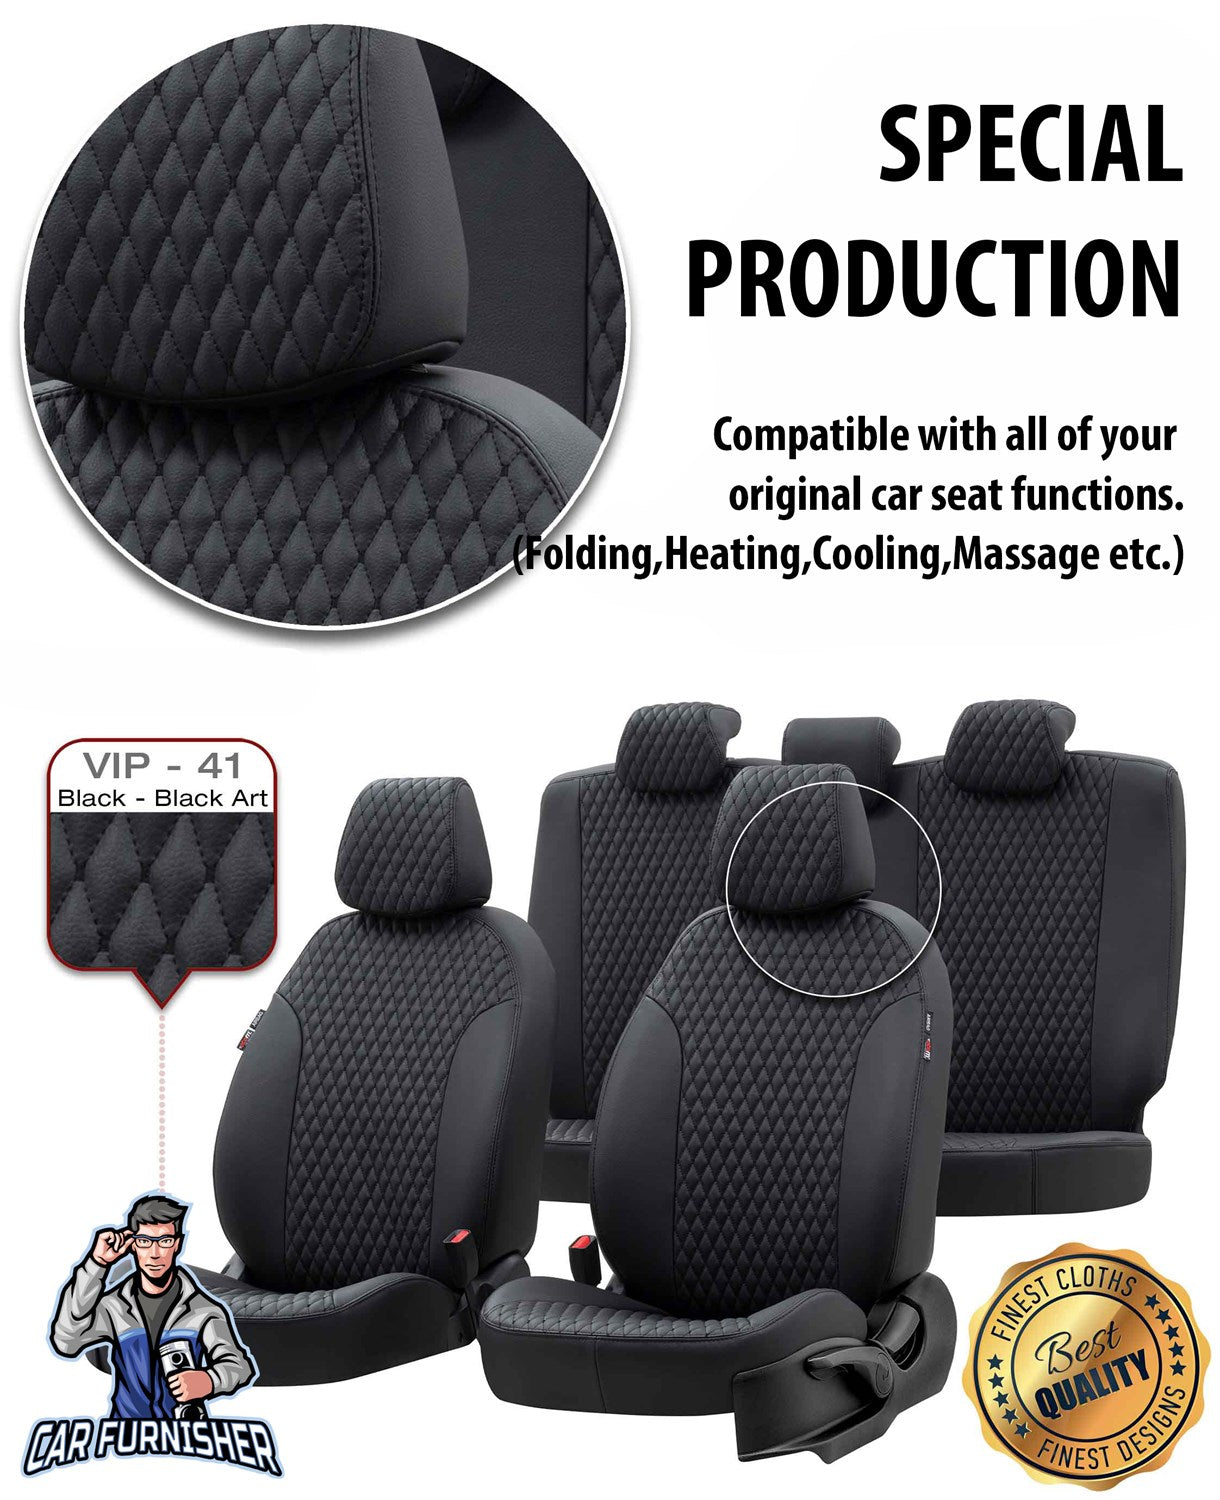 Skoda Karoq Seat Covers Amsterdam Leather Design Smoked Black Leather